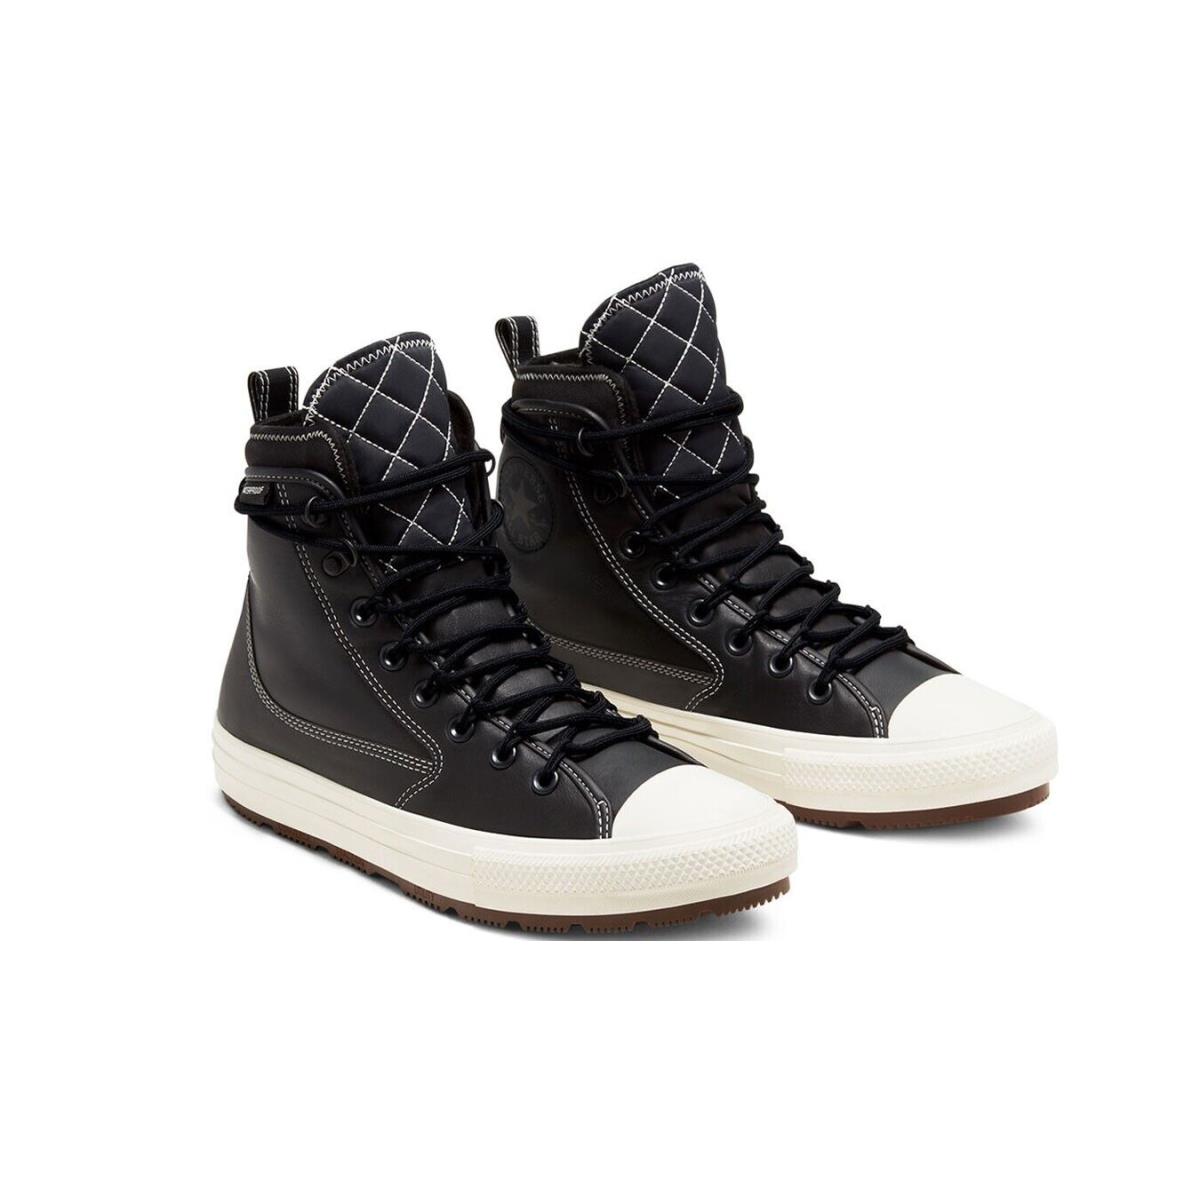 Converse Boots Size 9 Black Ctas All Terrain HI Waterproof Leather Shoes 168863C